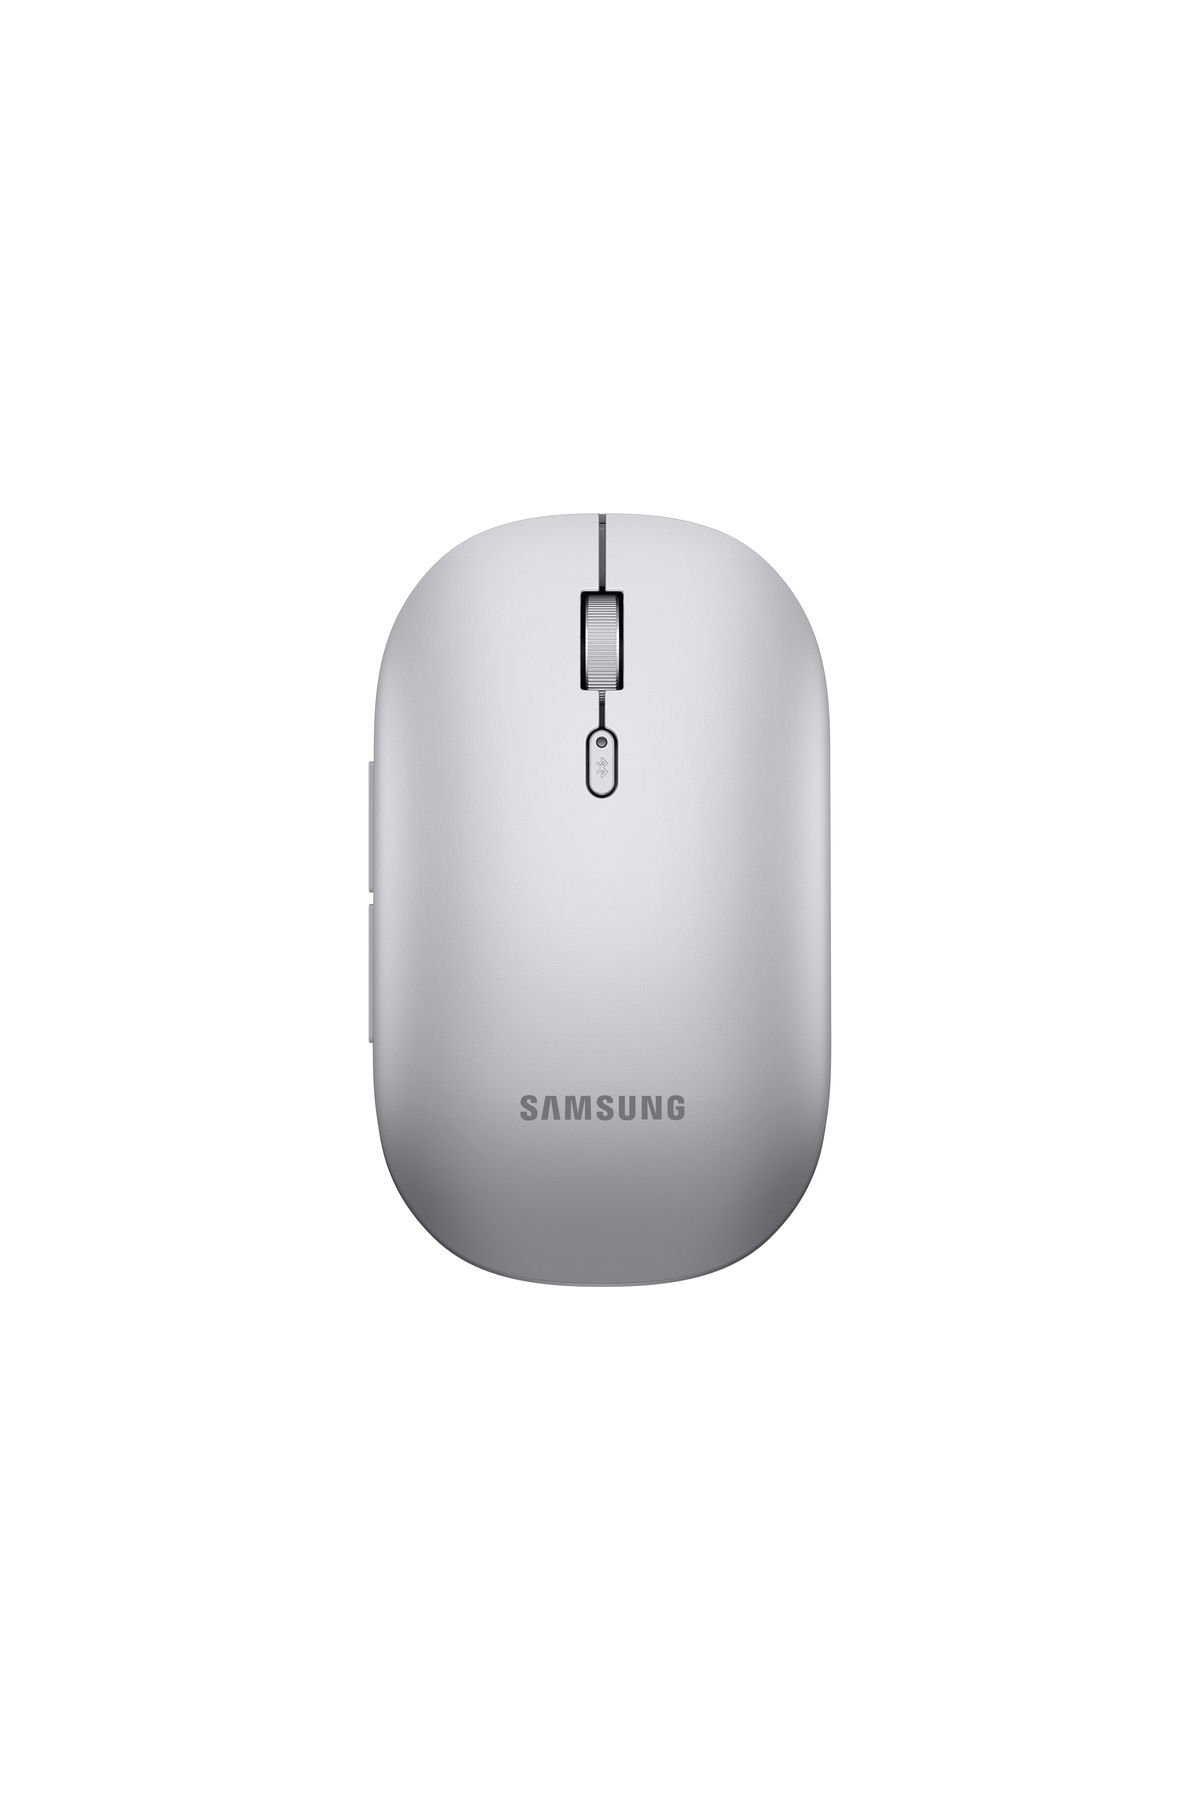 Samsung Bluetooth Mouse Slim Souris Mince Gümüş